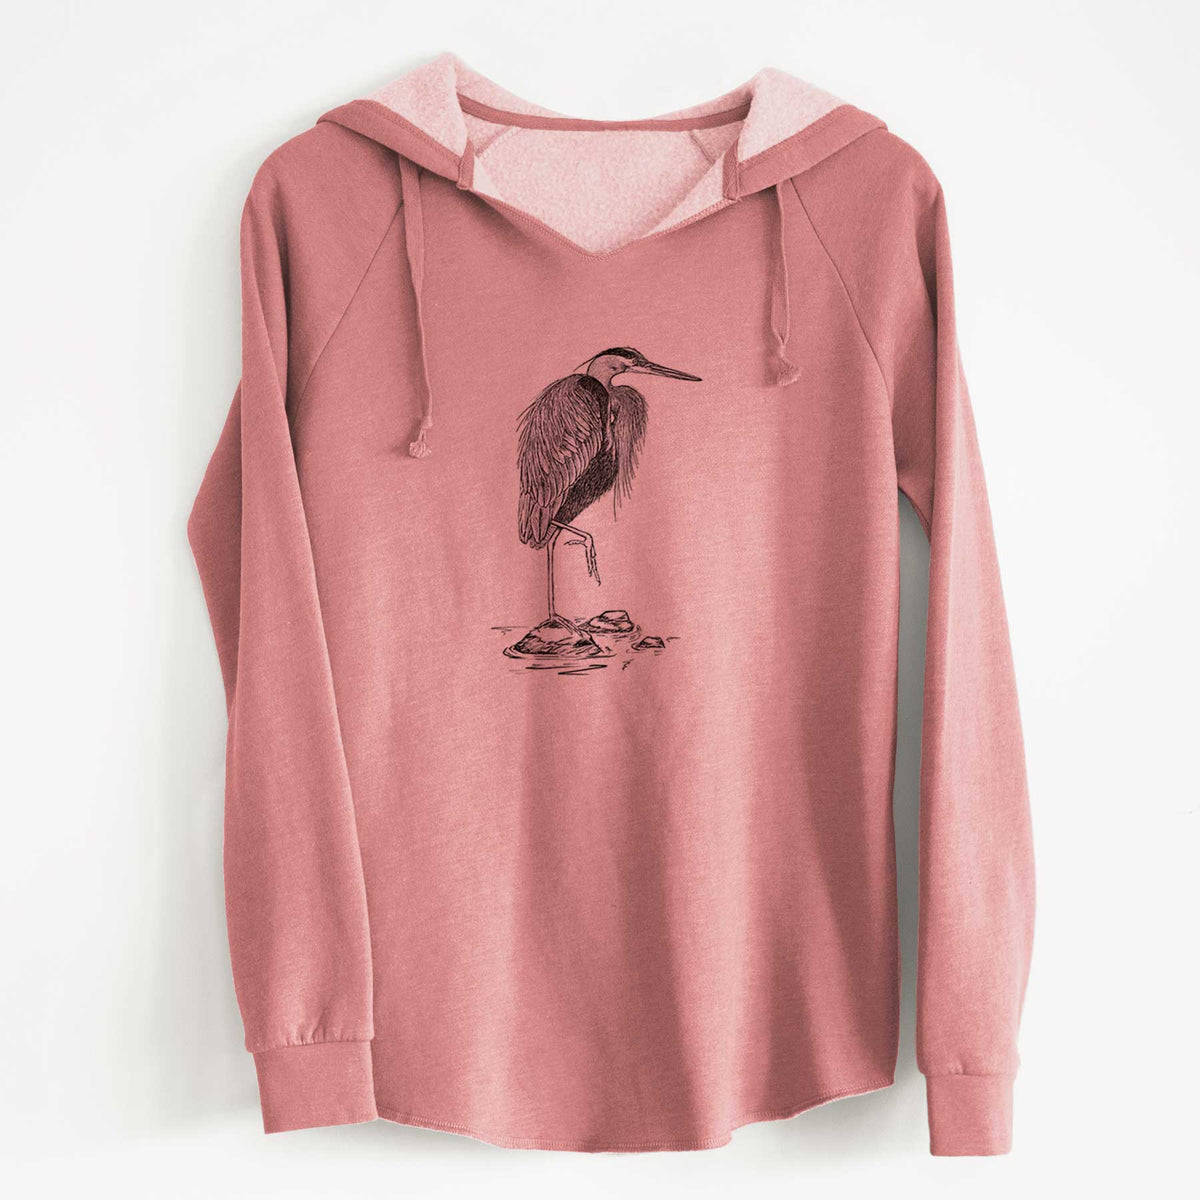 Ardea herodias - Great Blue Heron - Cali Wave Hooded Sweatshirt